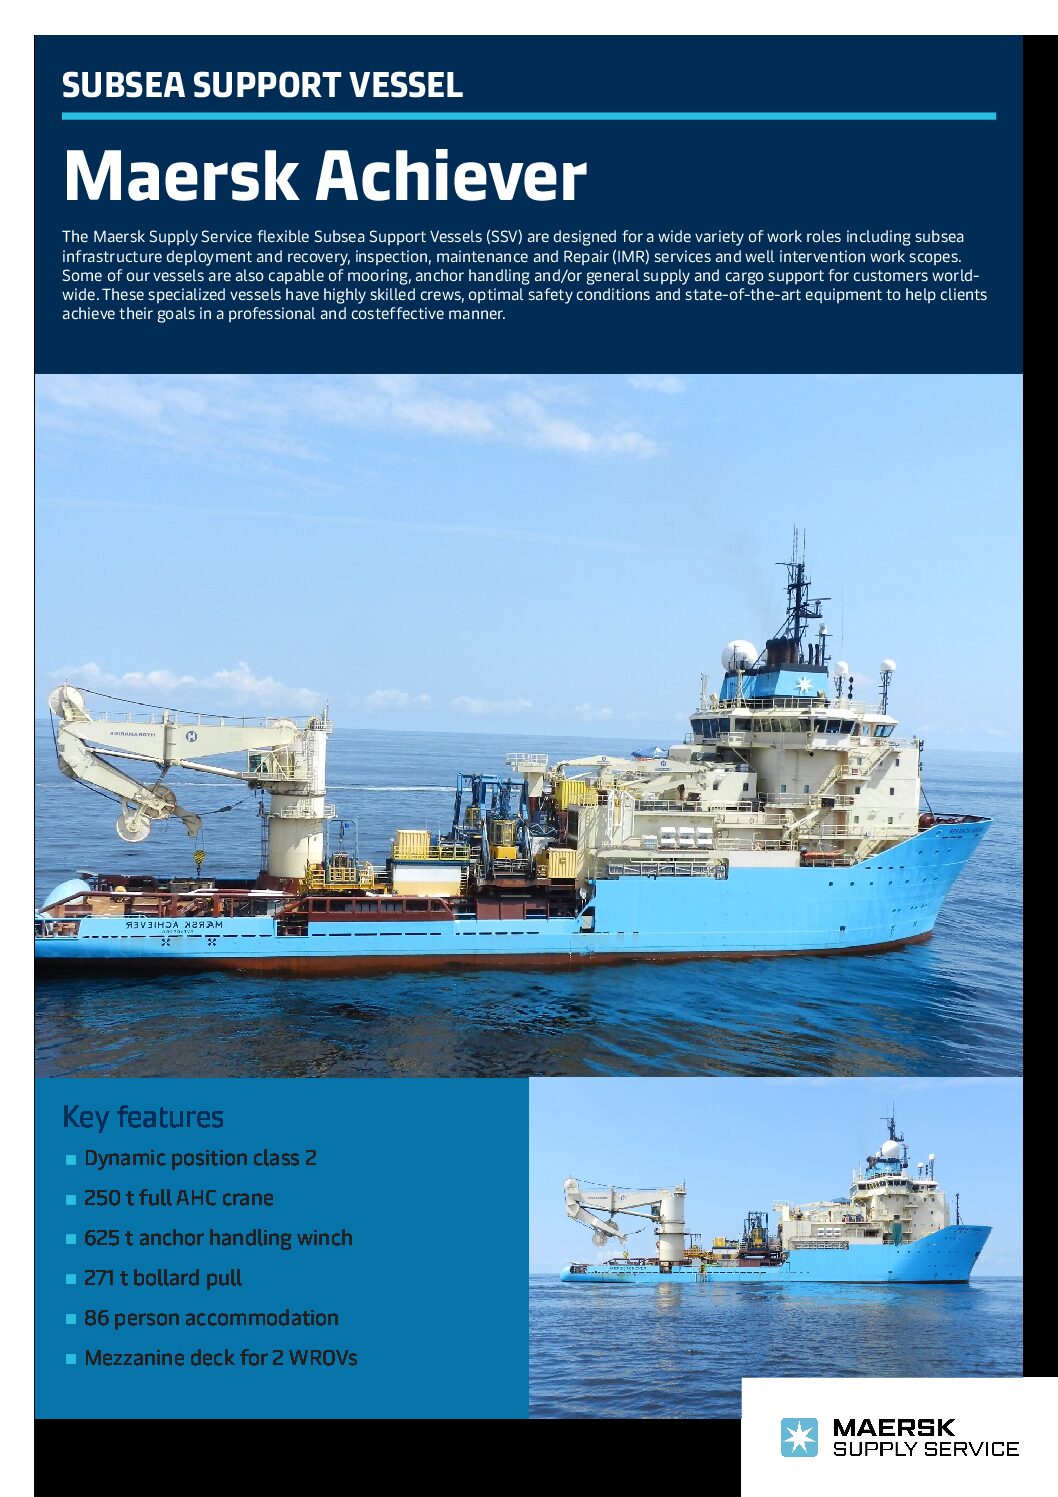 Maersk Achiever